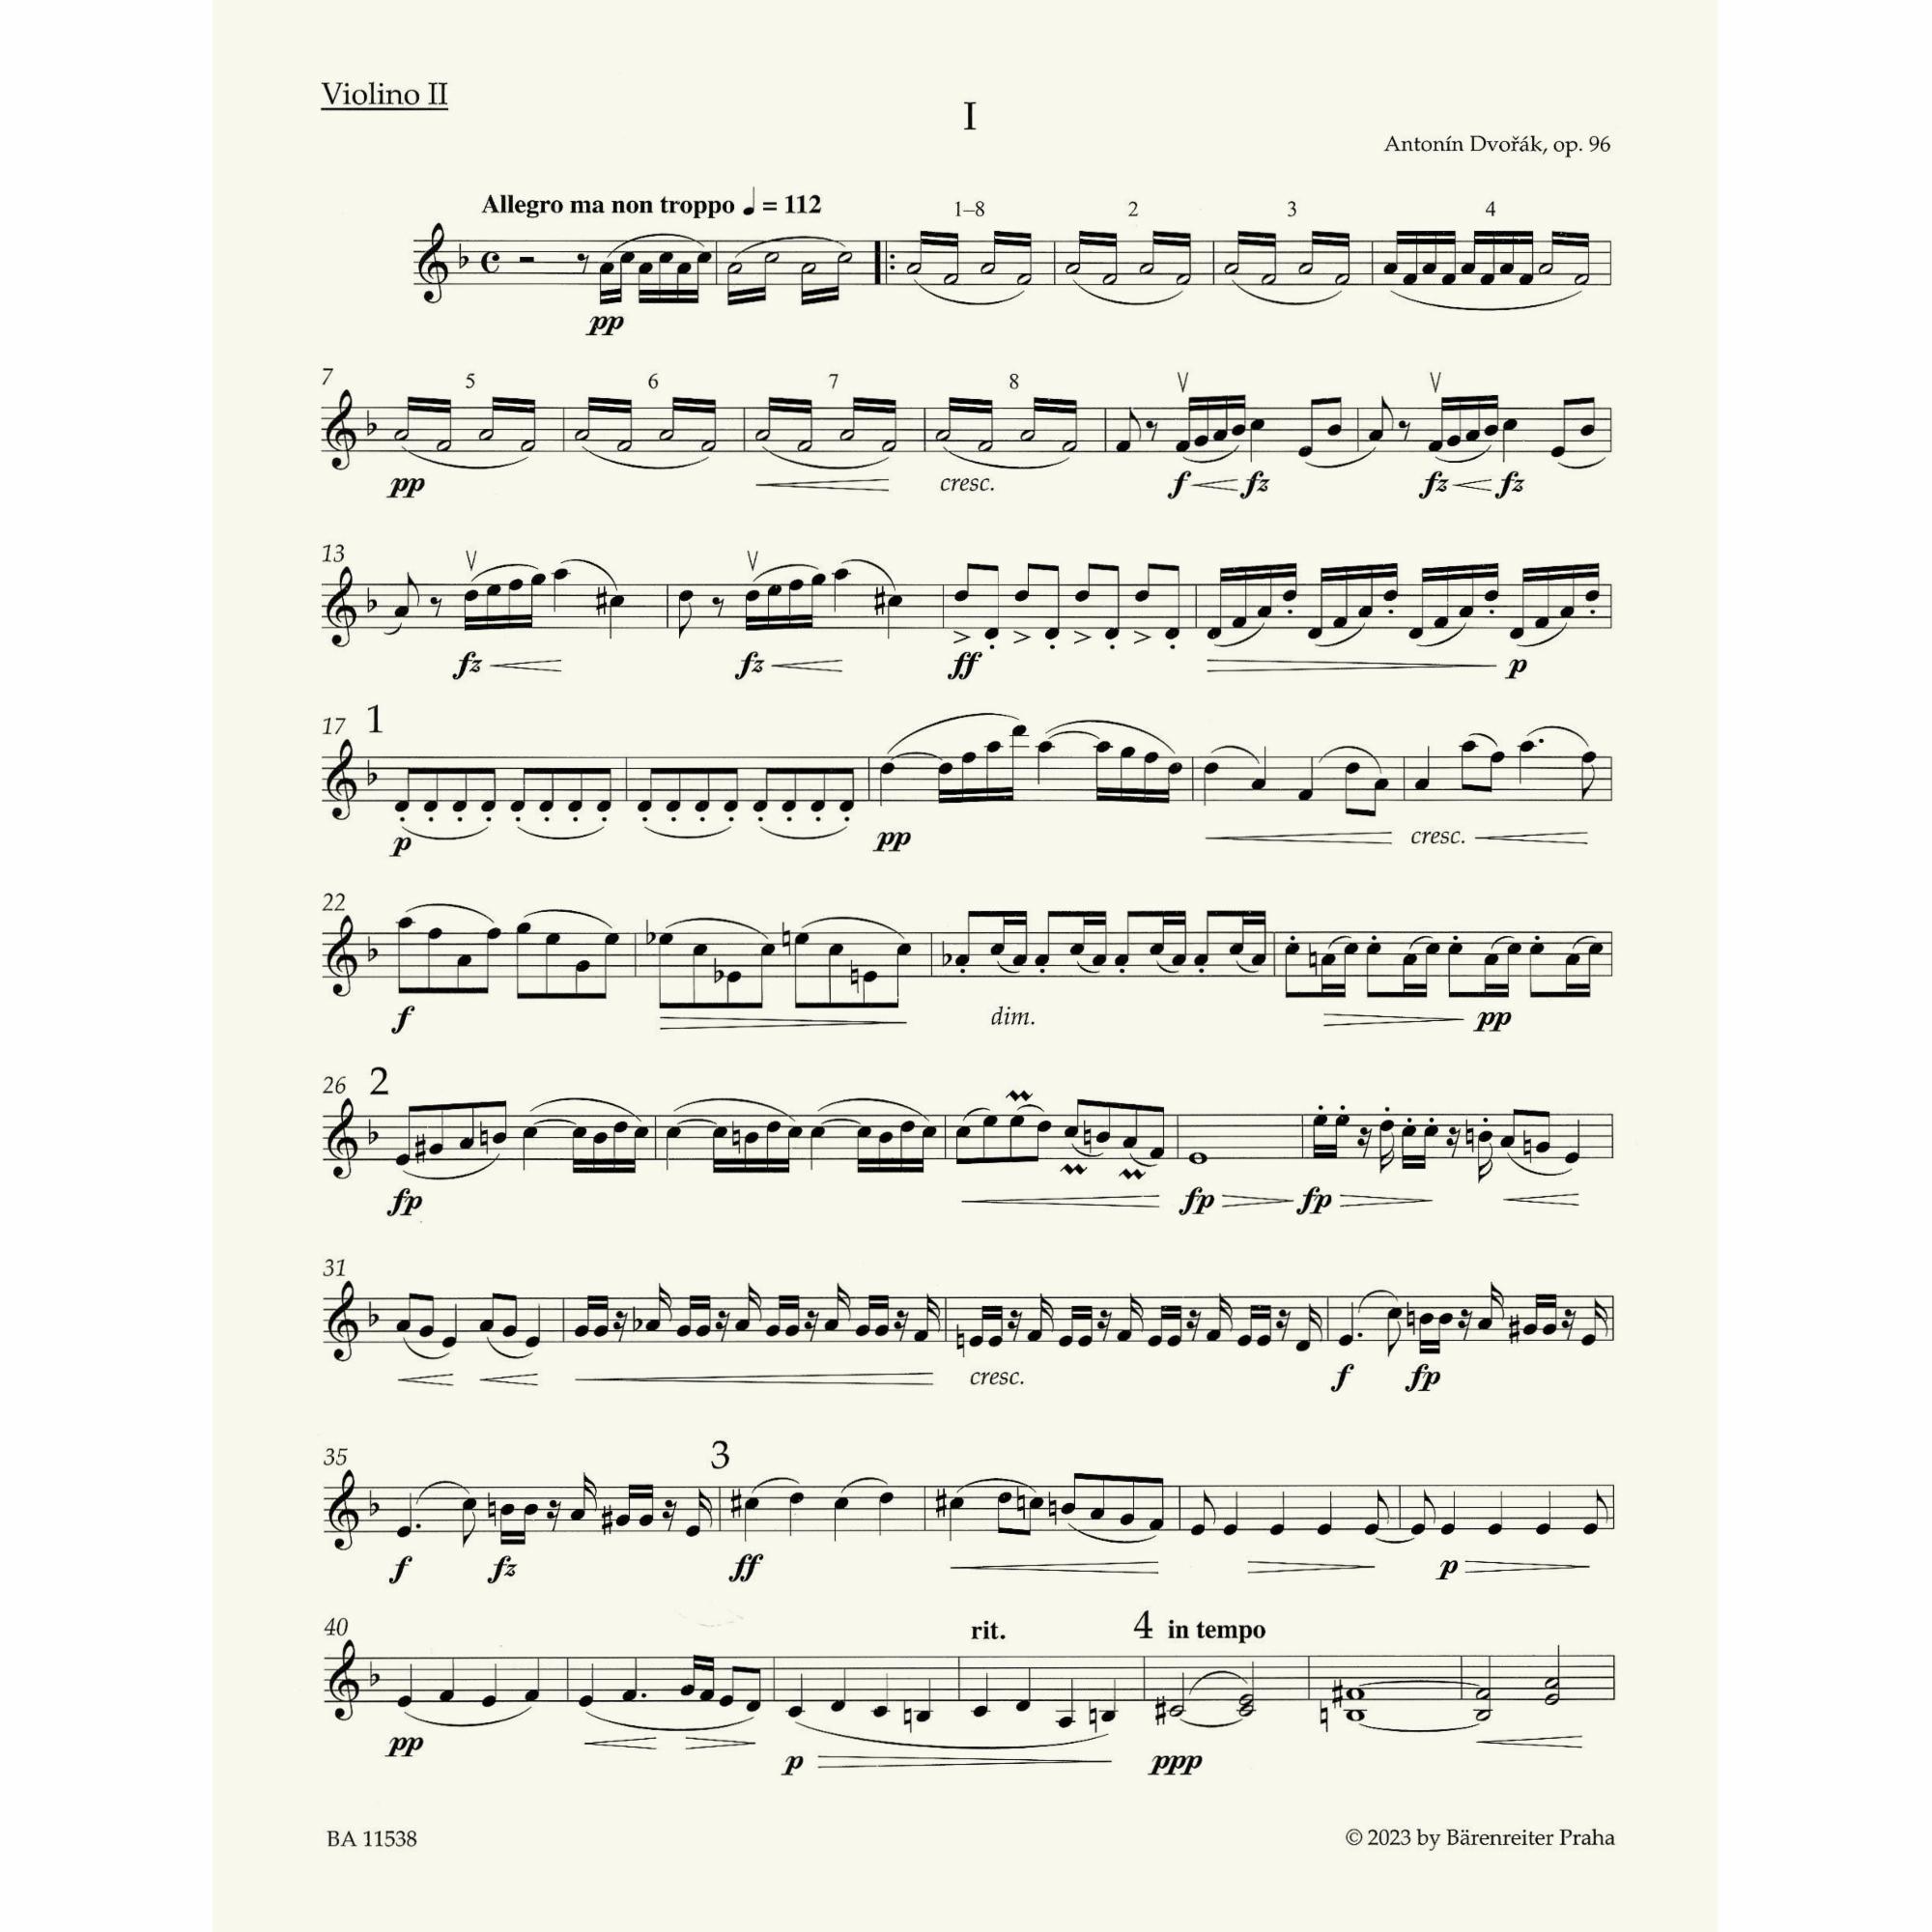 Sample: Violin II Part 